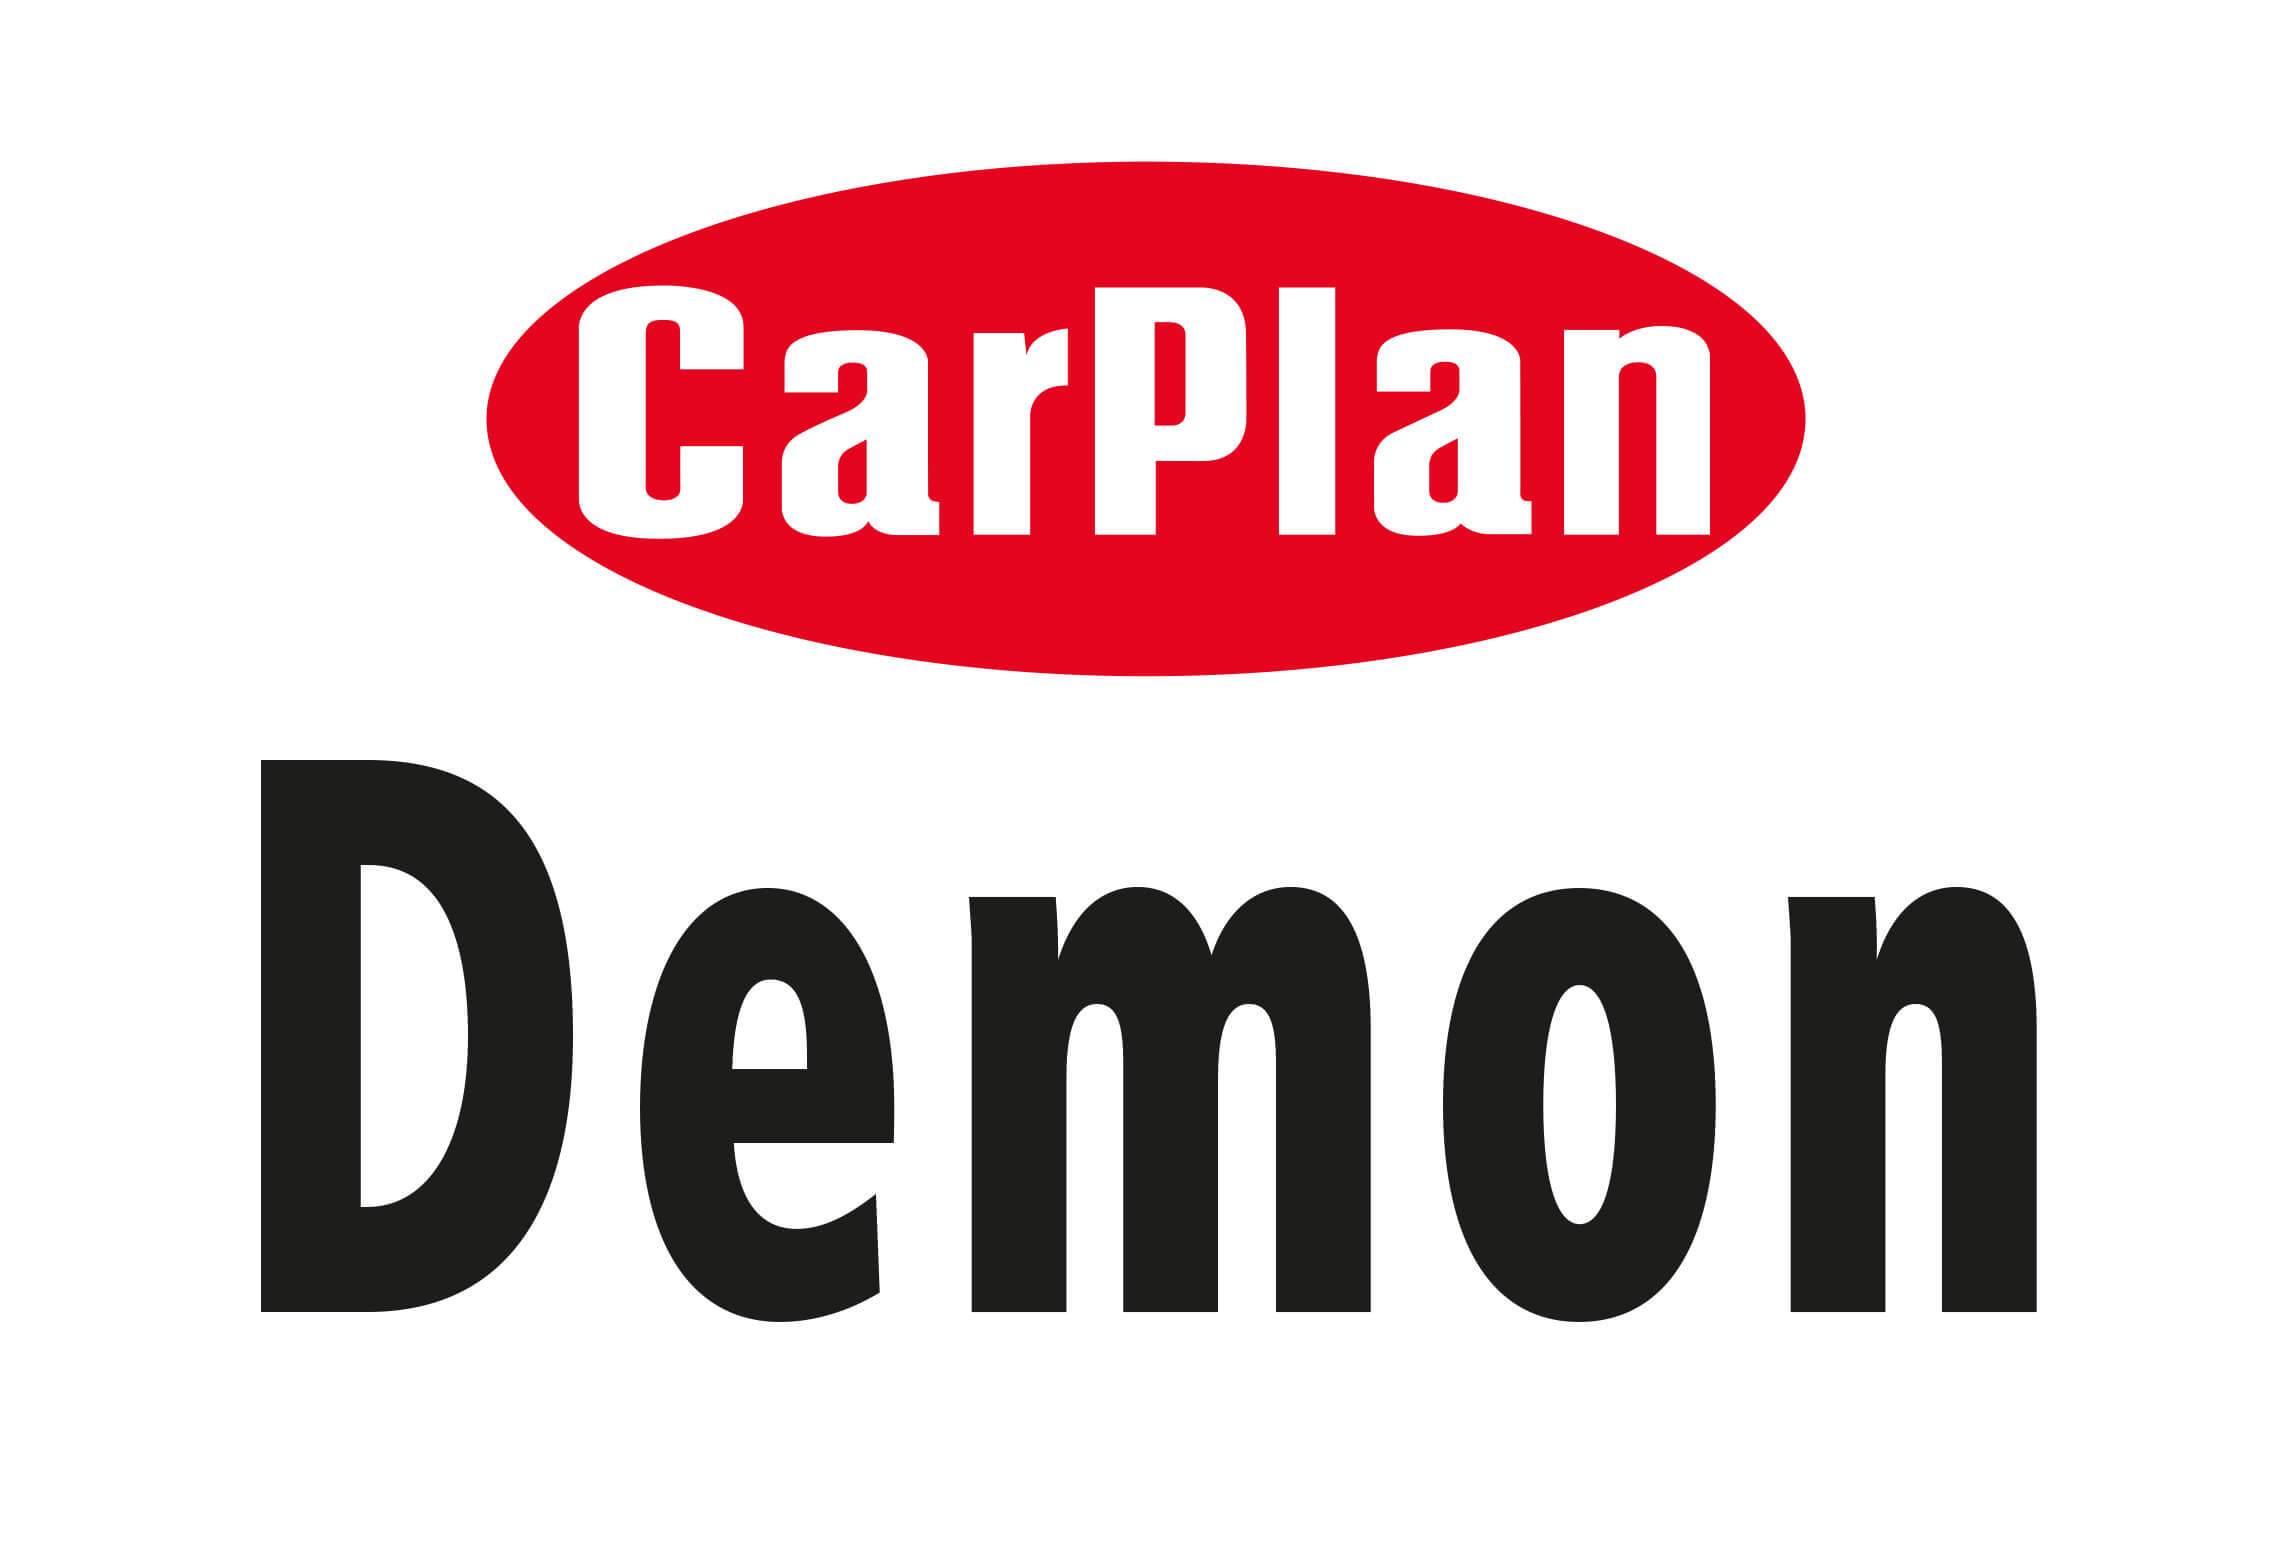 CARPLAN DEMON